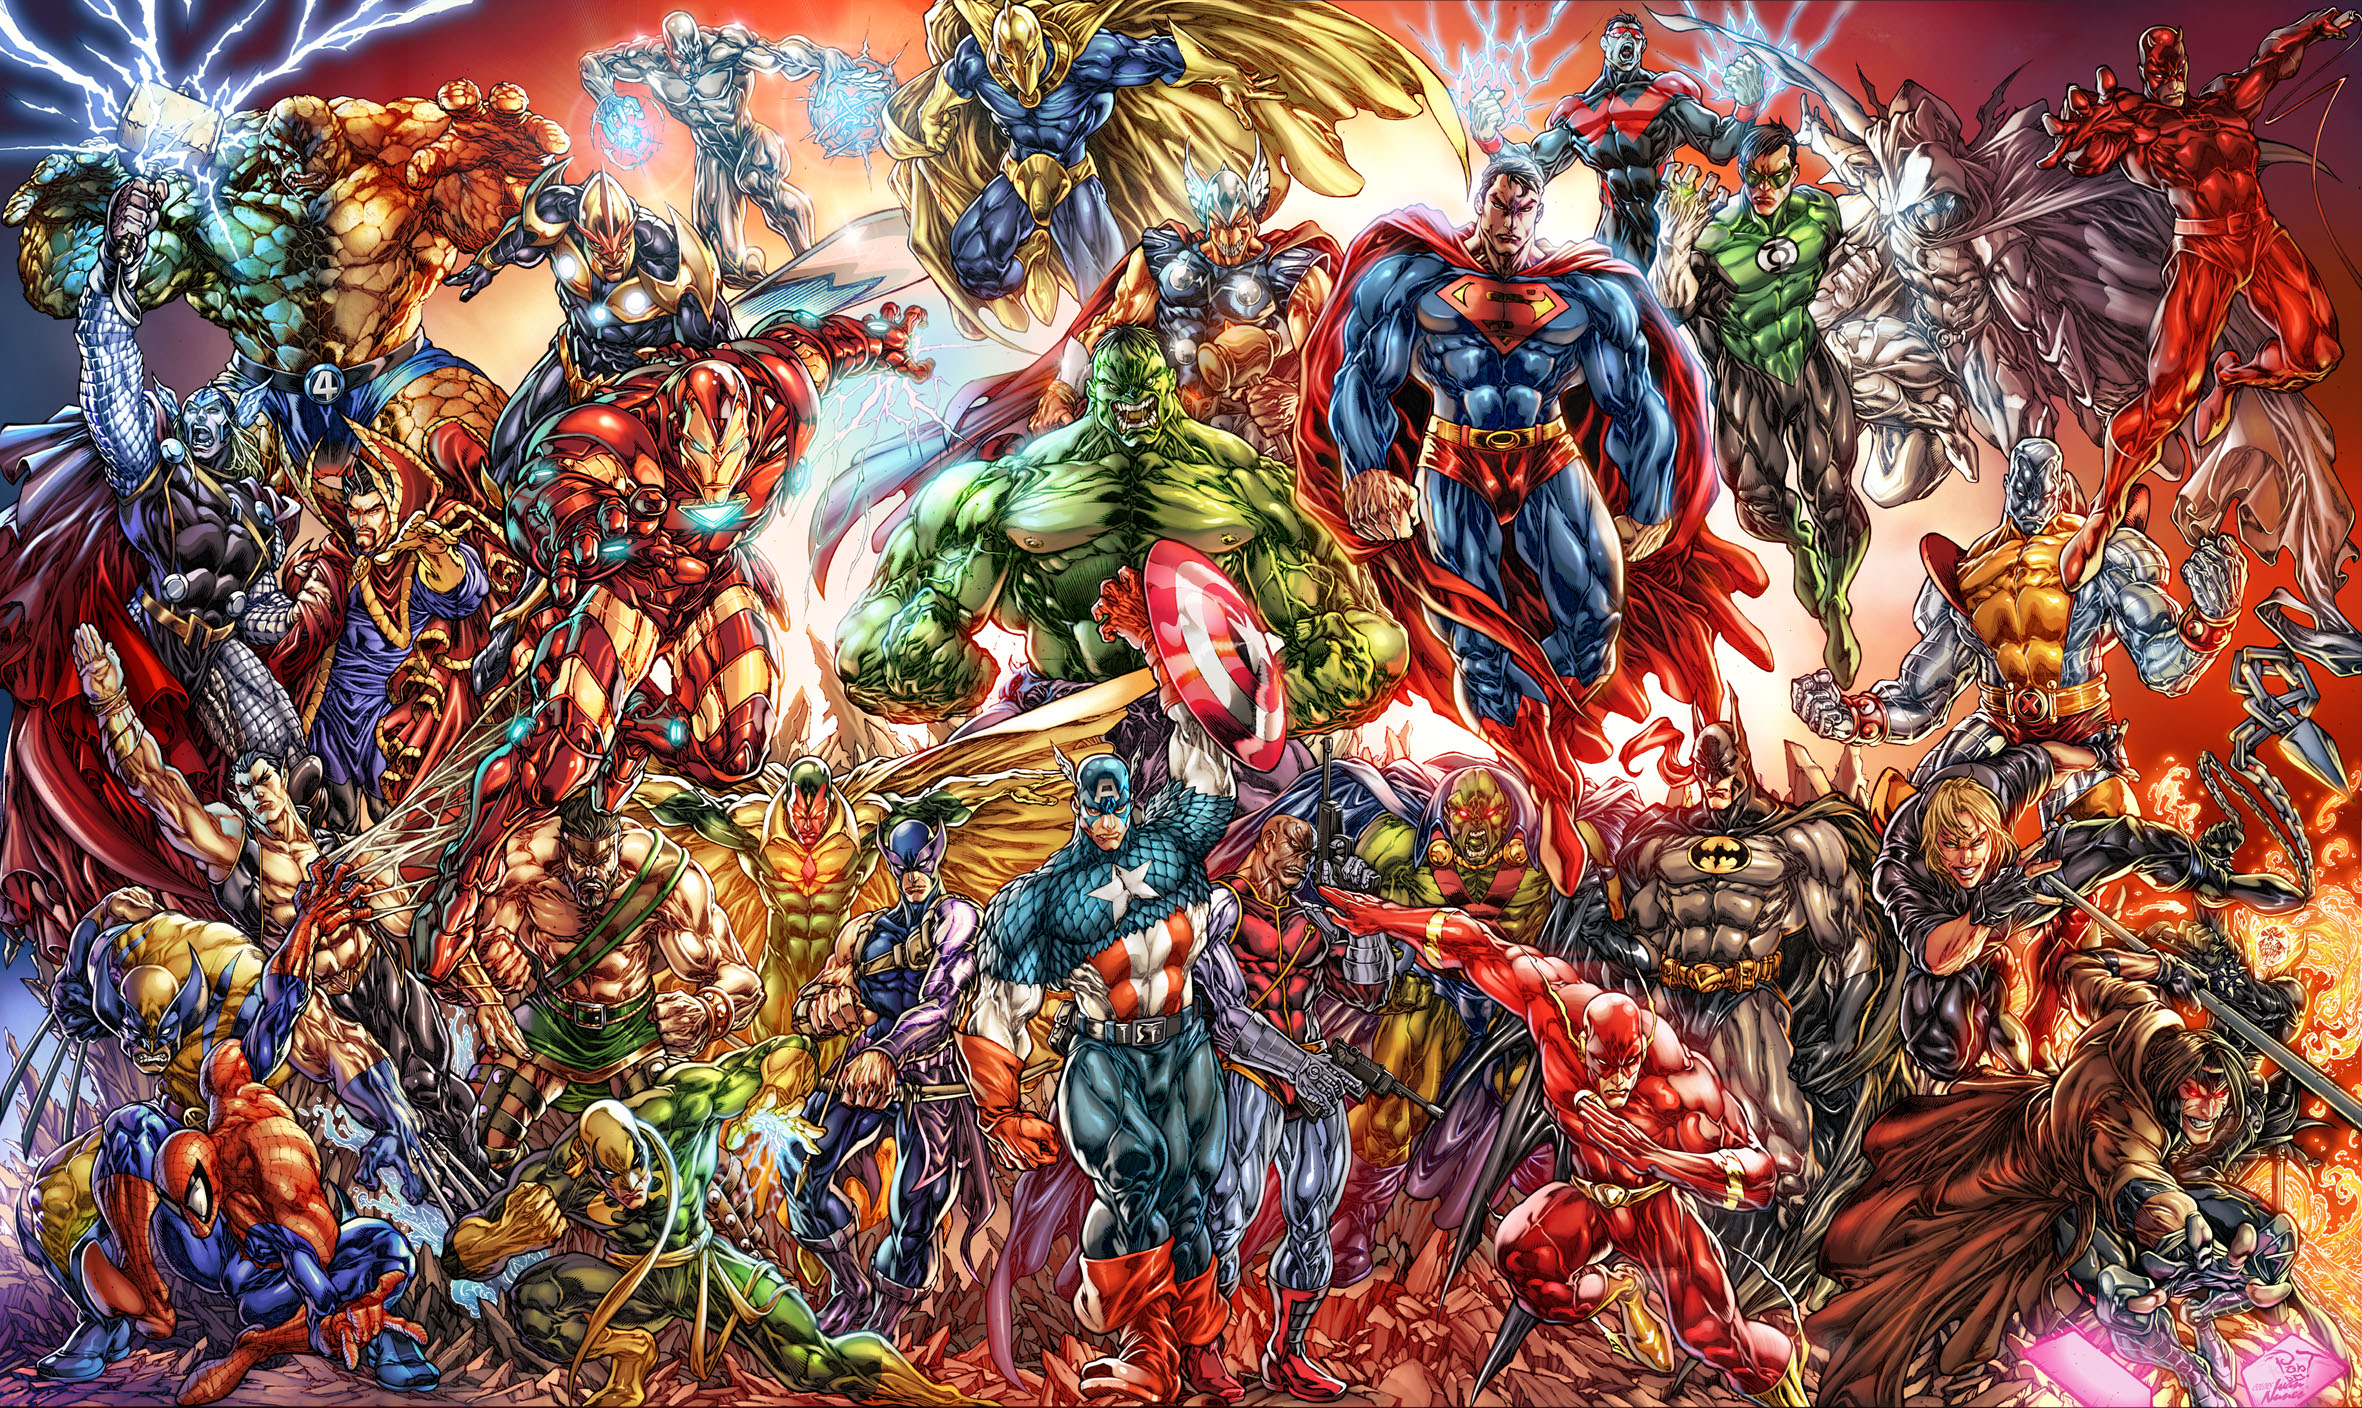 batman, hal jordan, superman, martian manhunter, spider man, daredevil, dc comics, hulk, comics, collage, barry allen, wolverine, ghost rider, ben grimm, beta ray bill, captain america, clint barton, colossus, danny rand, deathlok, doctor fate (dc comics), doctor strange, flash, gambit (marvel comics), green lantern, hawkeye, hercules (marvel comics), iron fist (marvel comics), iron man, j'onn j'onzz, longshot (marvel comics), moon knight, namor the sub mariner, nightwing, nova (marvel comics), peter parker, silver surfer, sub mariner, thing (marvel comics), thor, vision (marvel comics), wonder man